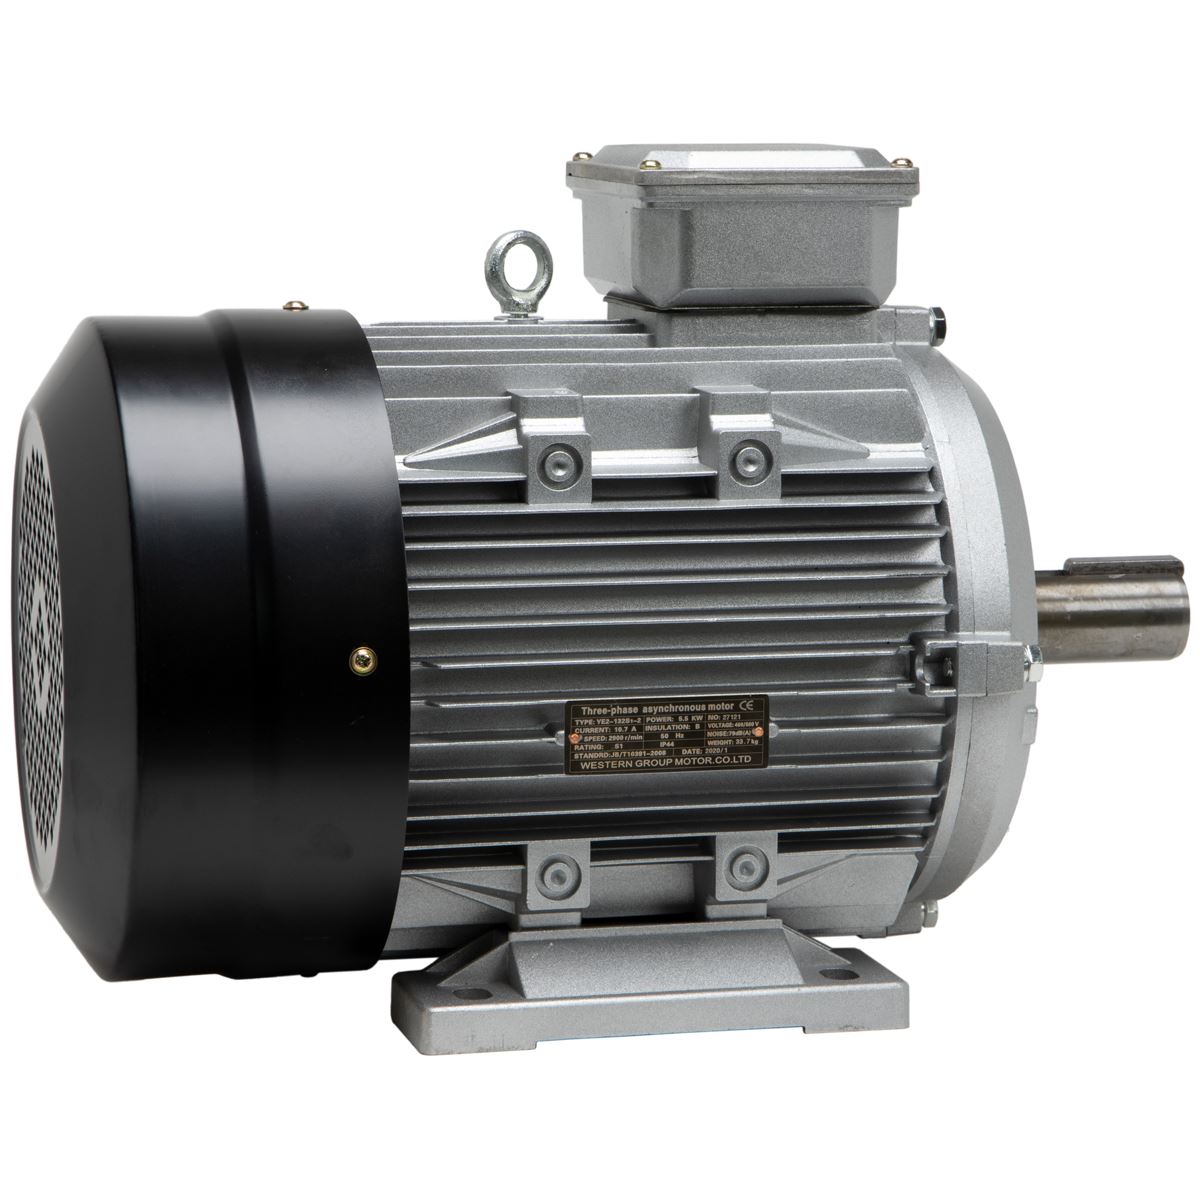 Sealey Premier Air compressor Electrical Motor 7.5hp 5.5kw